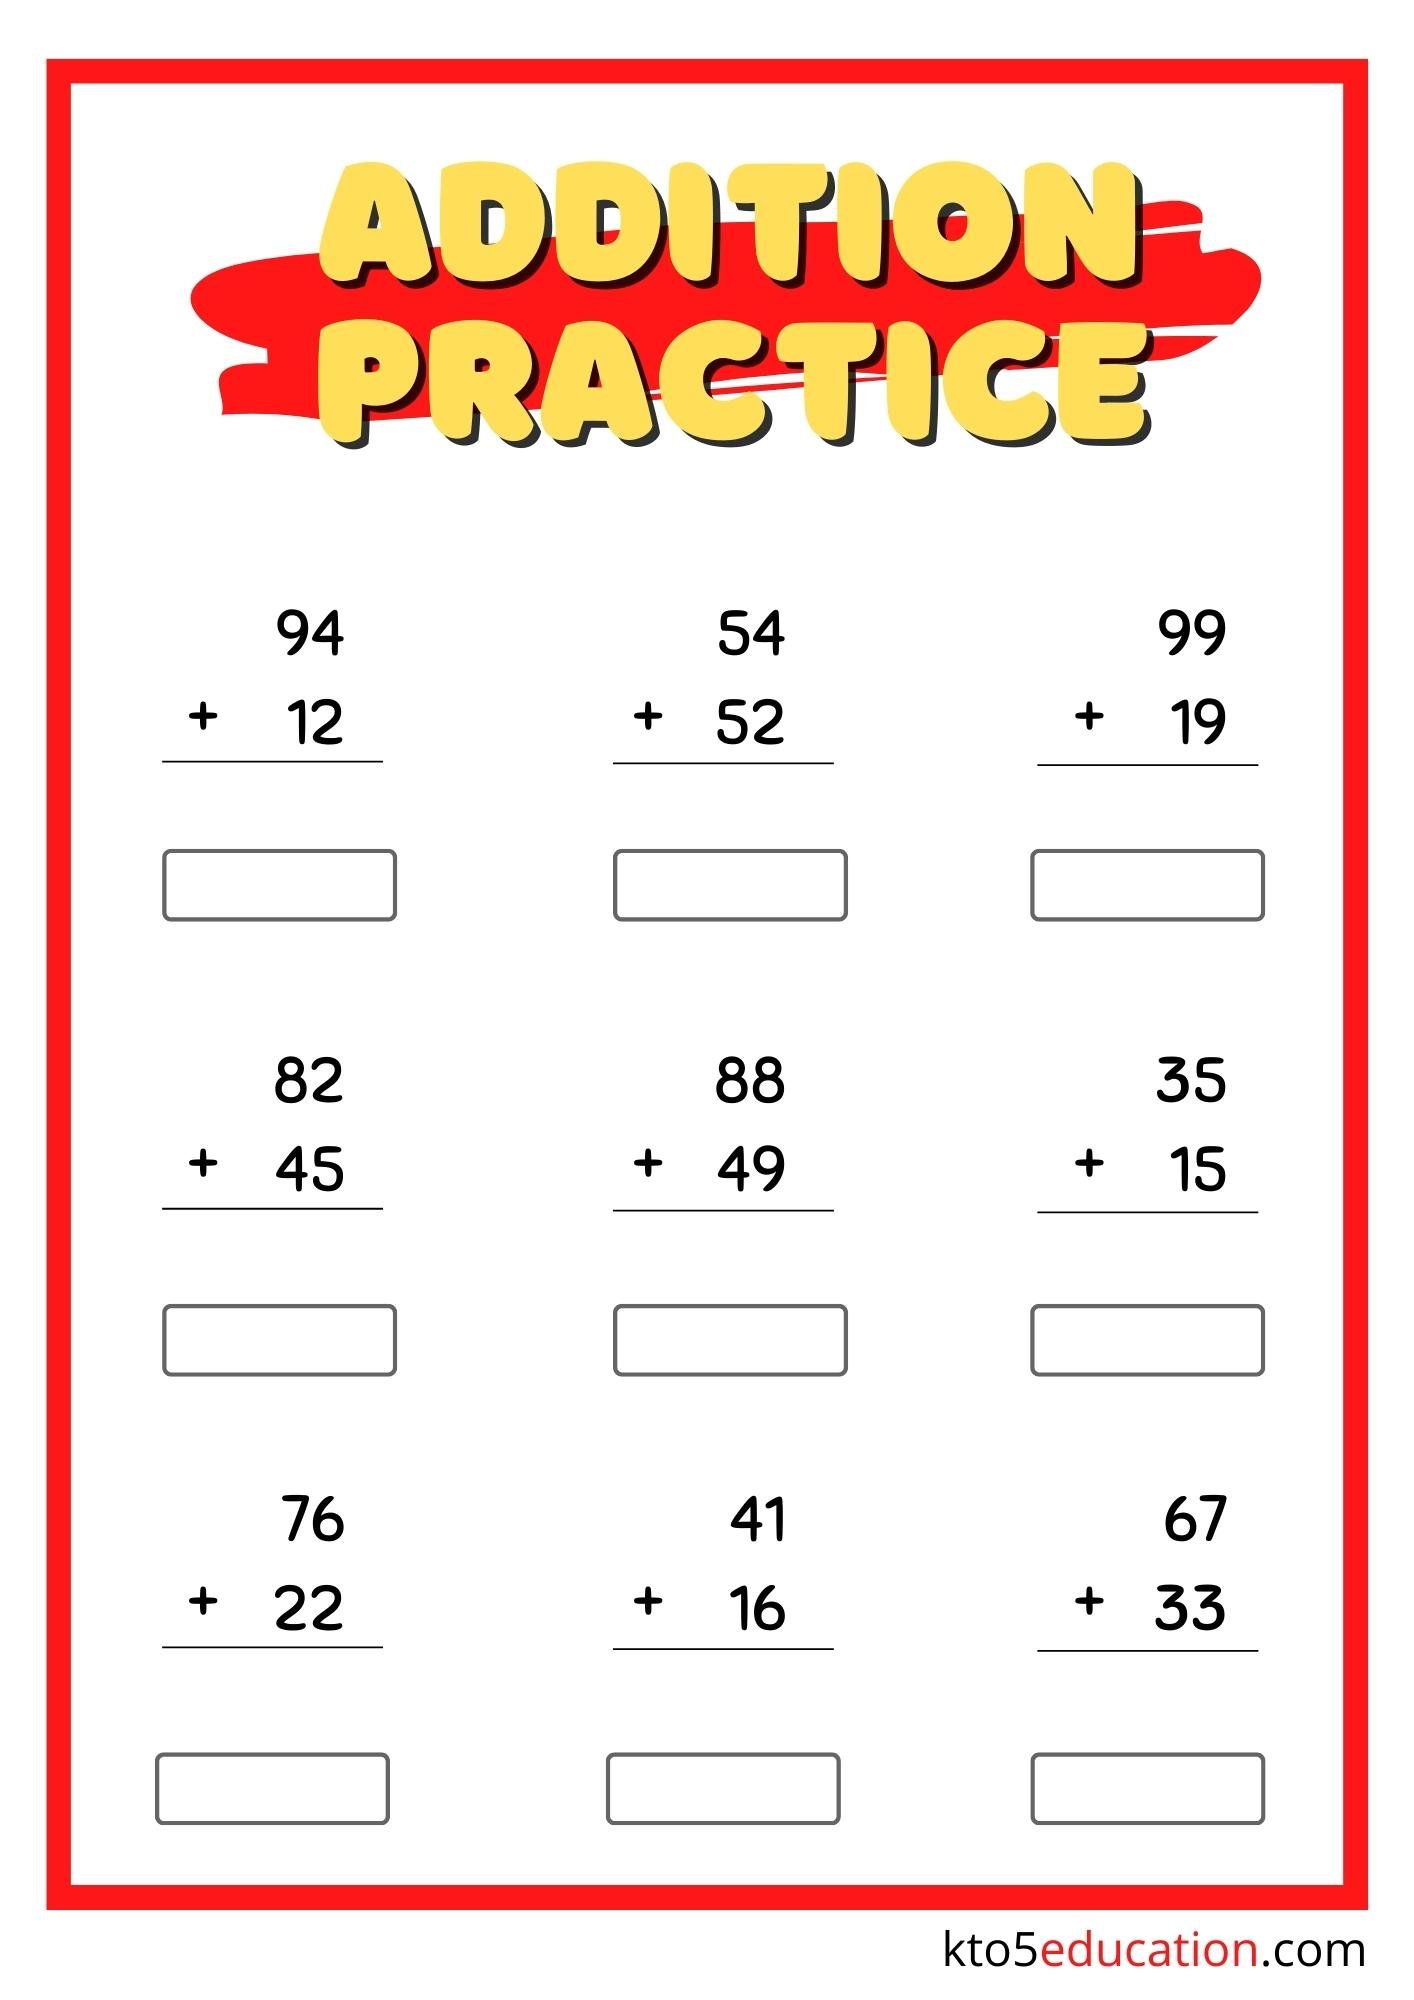 Addition Practice Worksheets Kindergarten